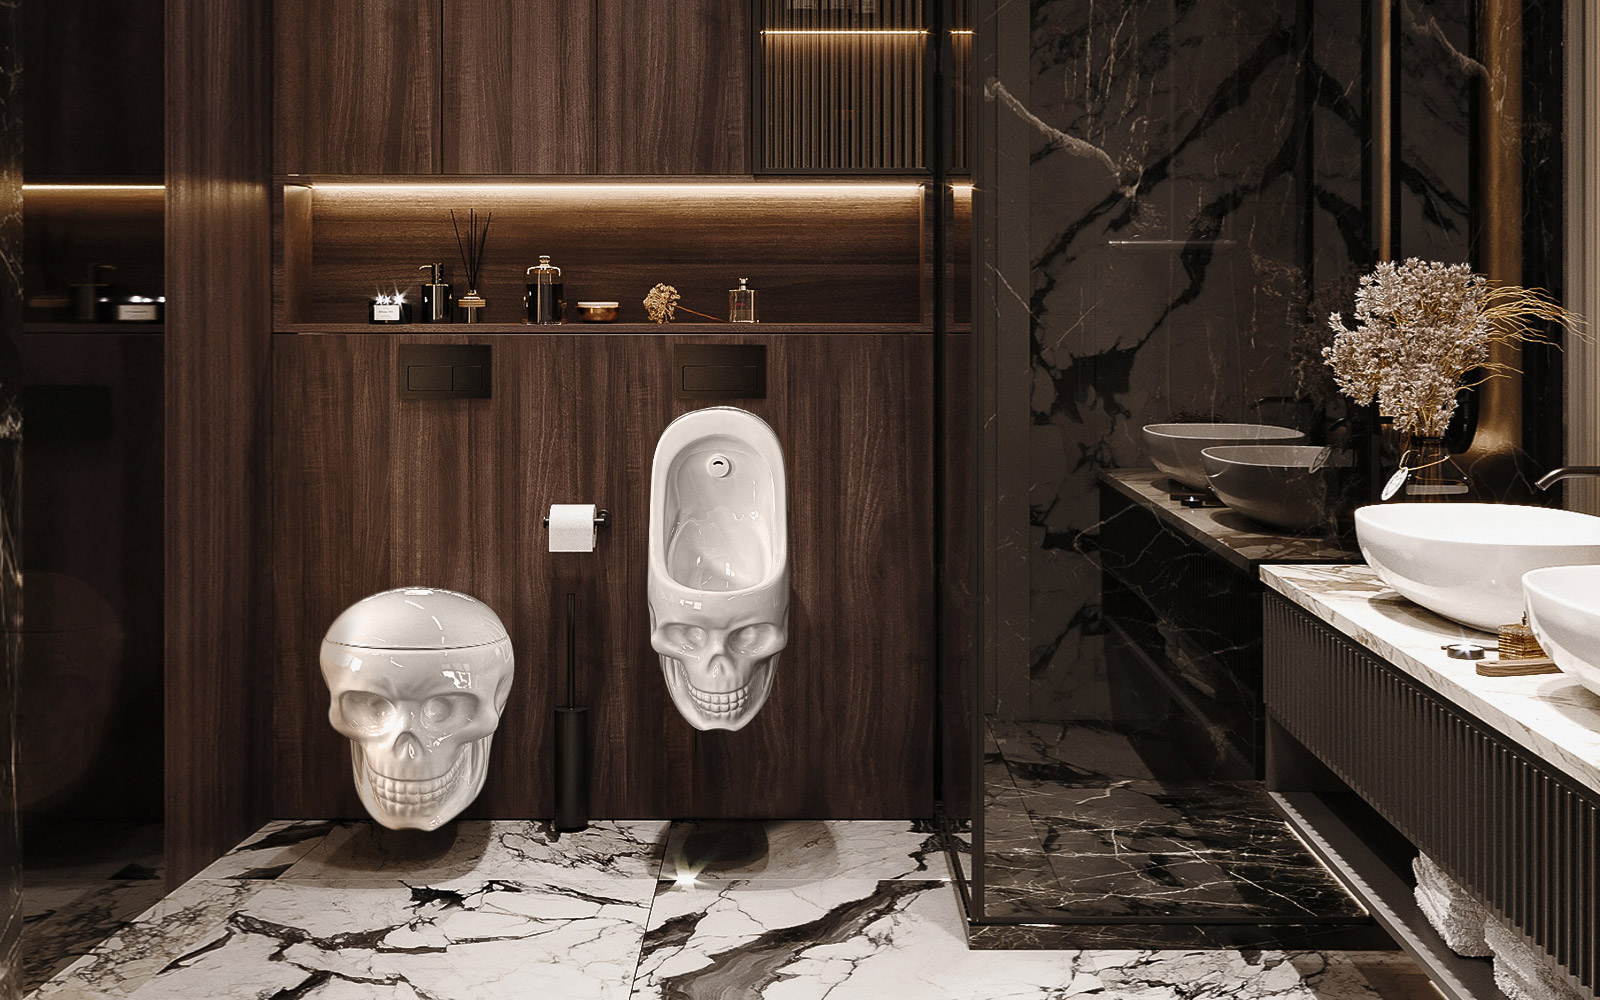 White Skullpot Skull Toilet in a bright design bathroom